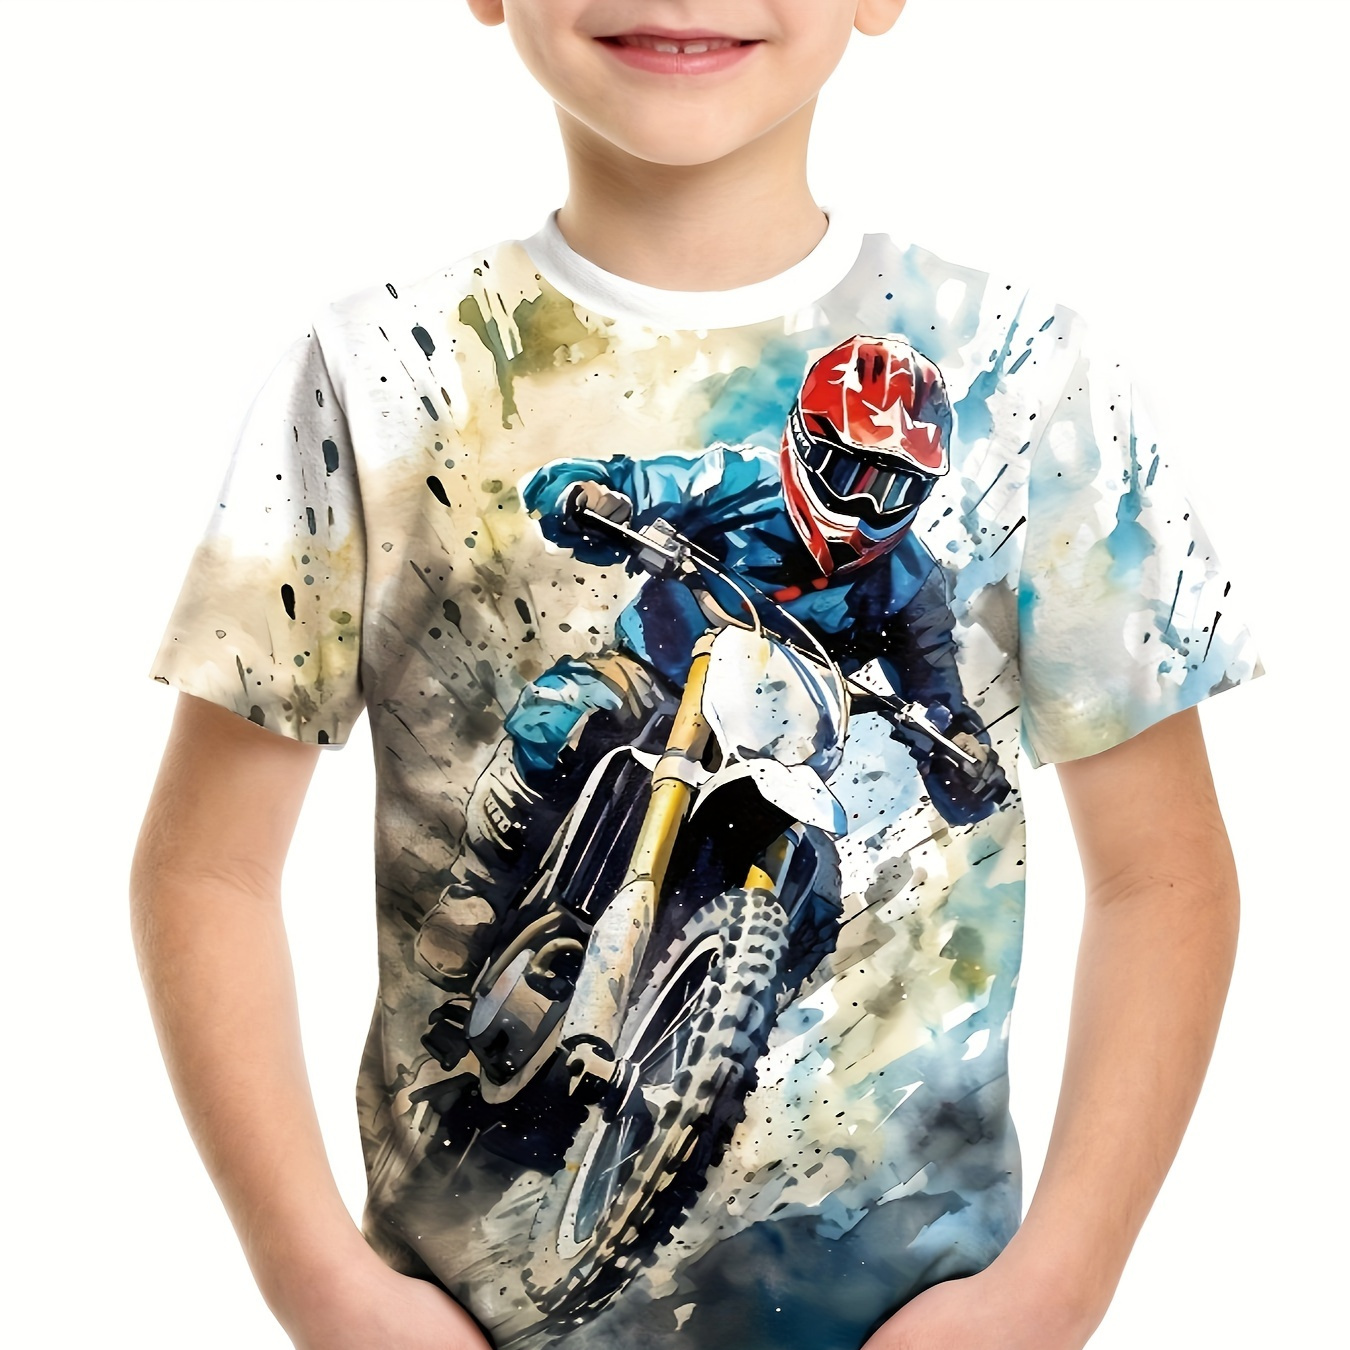 

Cool Dirt Biker 3d Print T-shirt, Tees For Boys, Casual Short Sleeve T-shirt For Summer Spring Fall